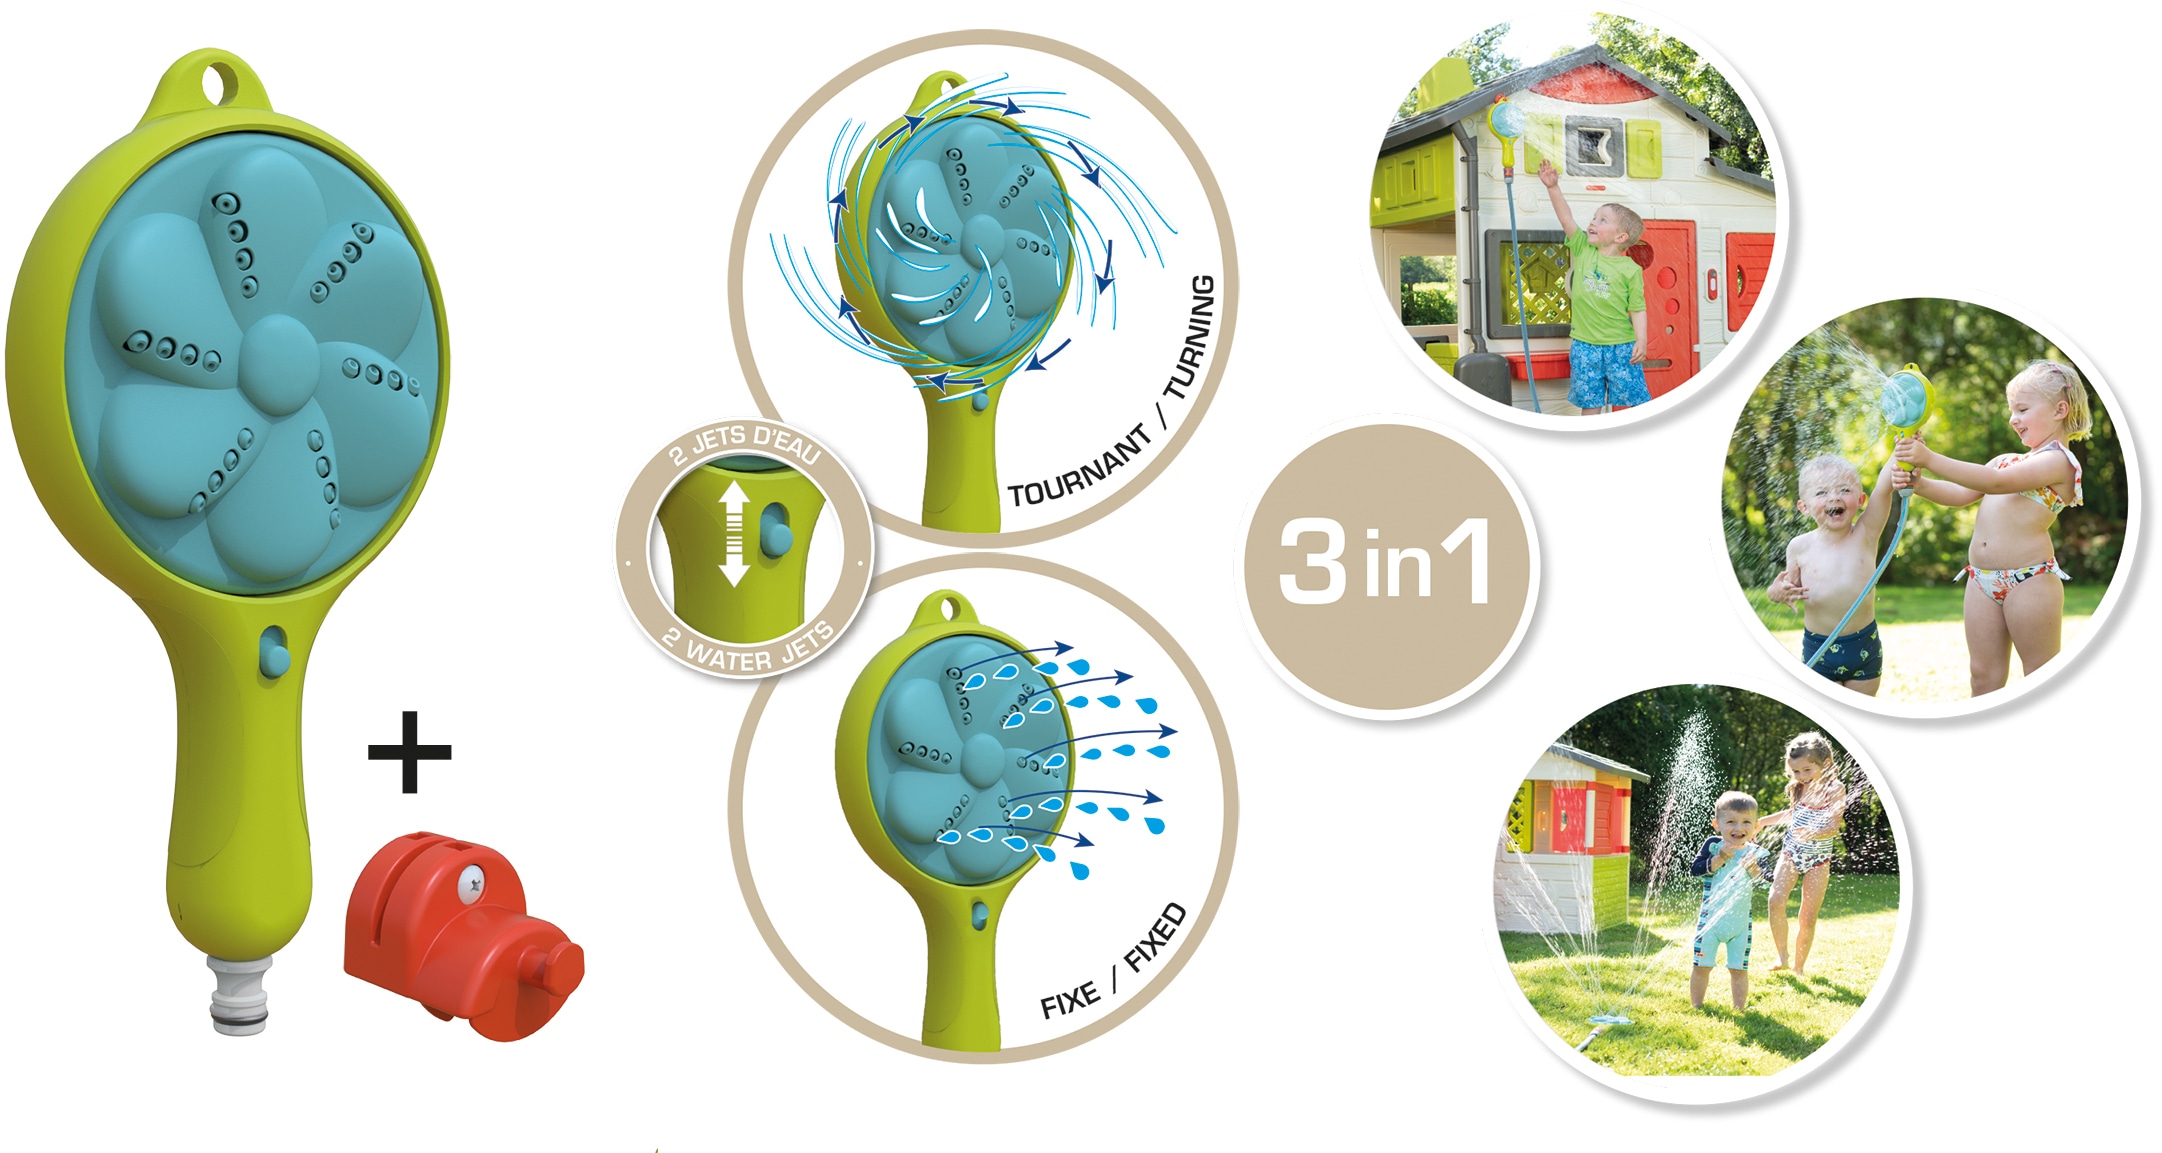 Smoby Spiel-Wassersprenkler »3in1 Gartendusche«, Made in Europe